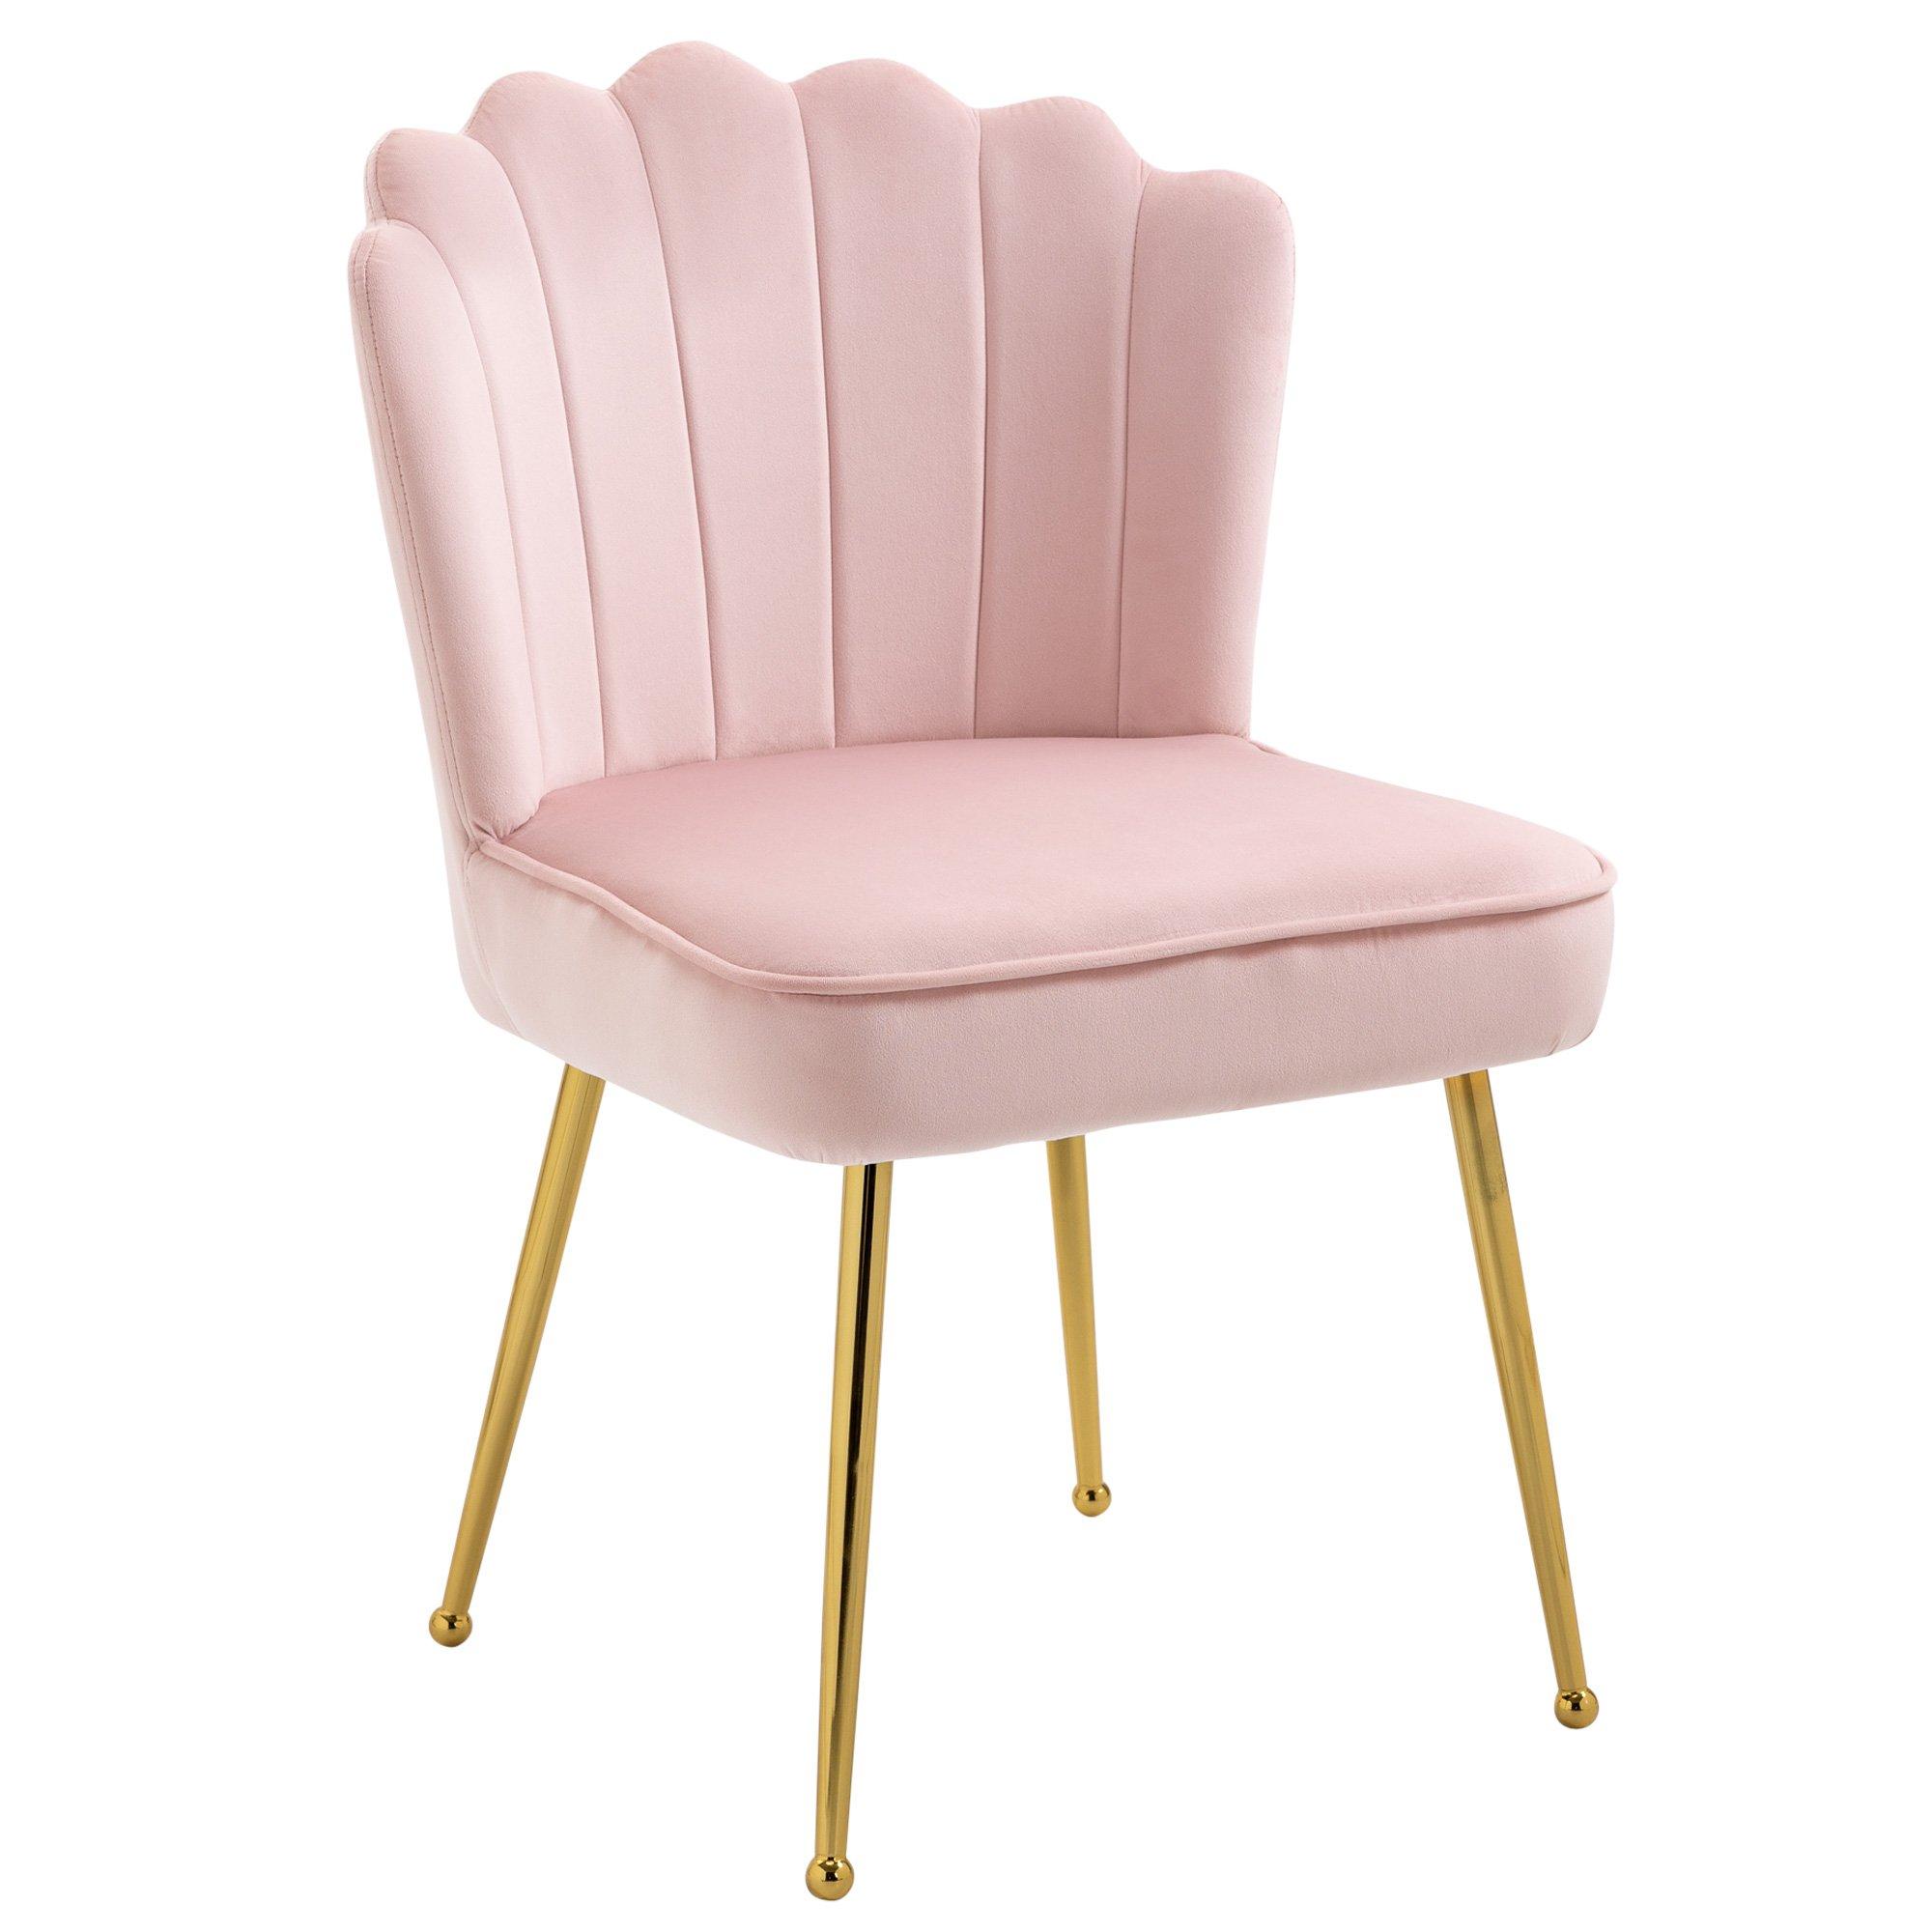 Velvet-Feel Shell Luxe Accent Chair Home Bedroom Lounge